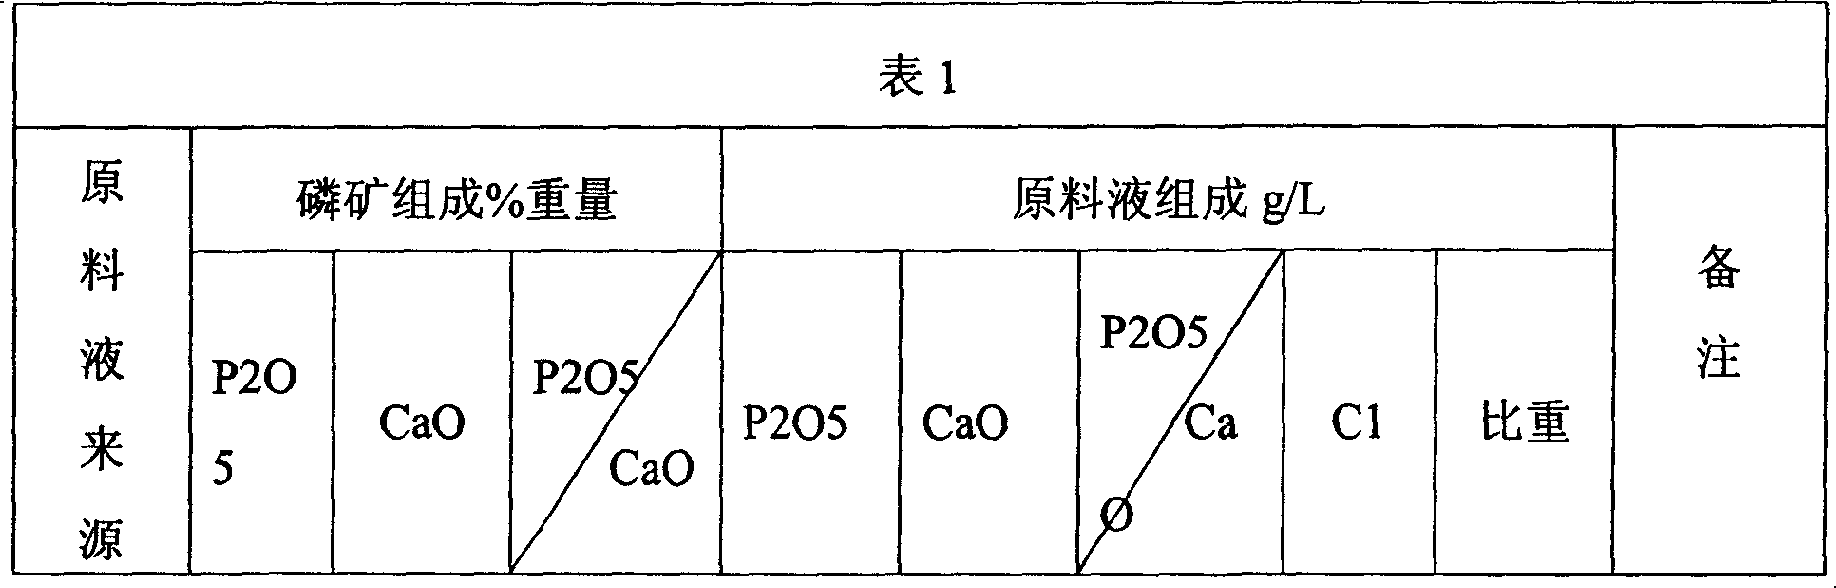 Process for mfg. industrial phosphoric acid by low-grade phosphorus deposit in hydrogen chloride decomposition